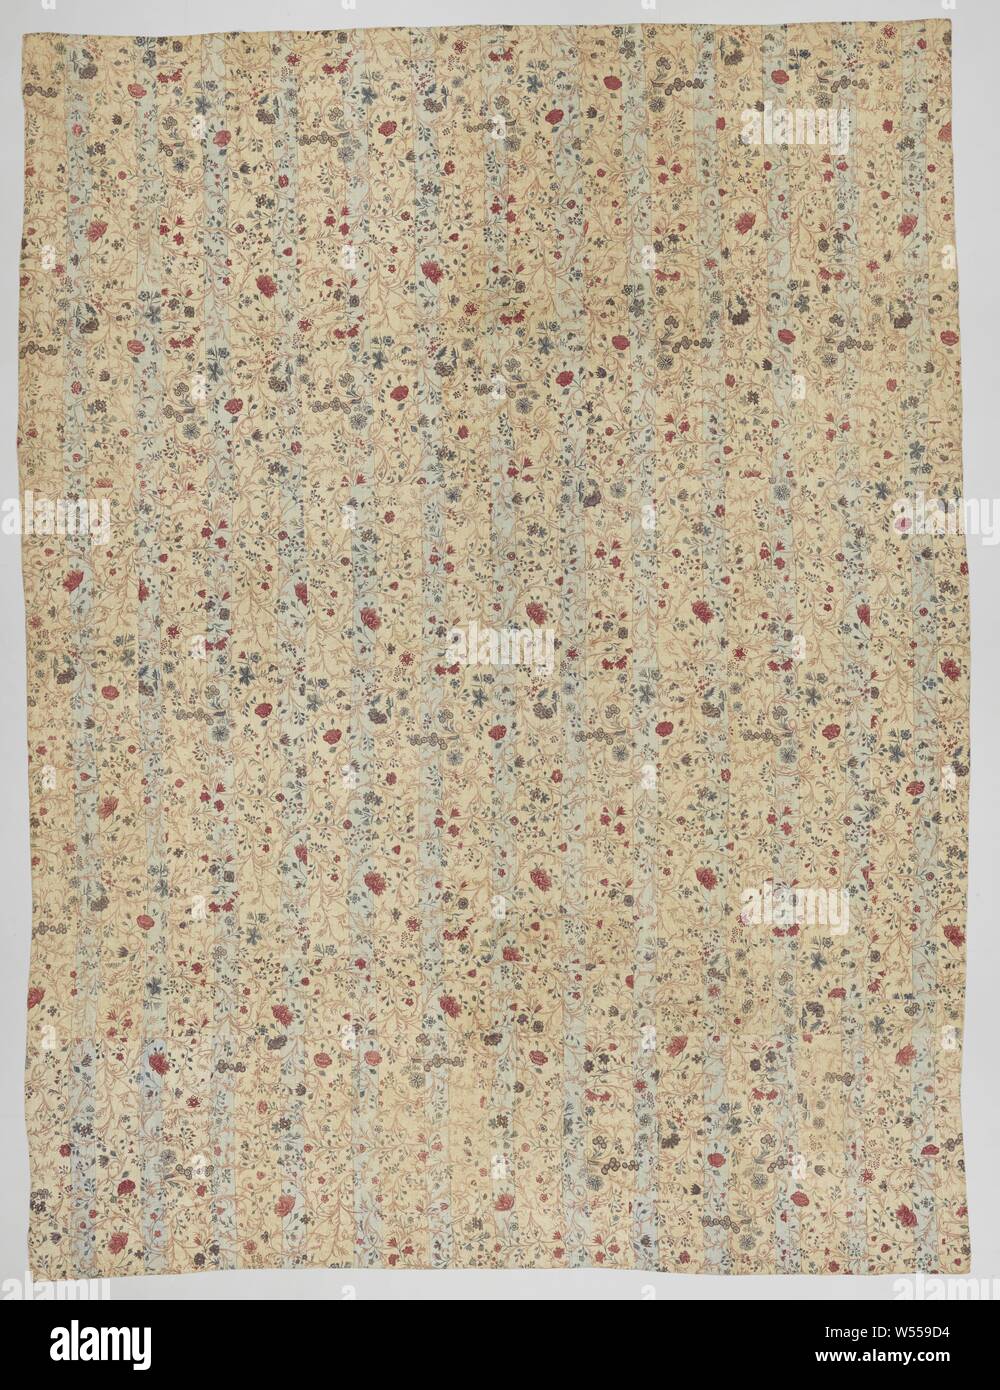 Stitched stitches bedspread, Stitched stitches bedspread., Voor-Indie, c. 1600 - c. 1980, cotton (textile), chintz, h 263 cm × w 197 cm Stock Photo